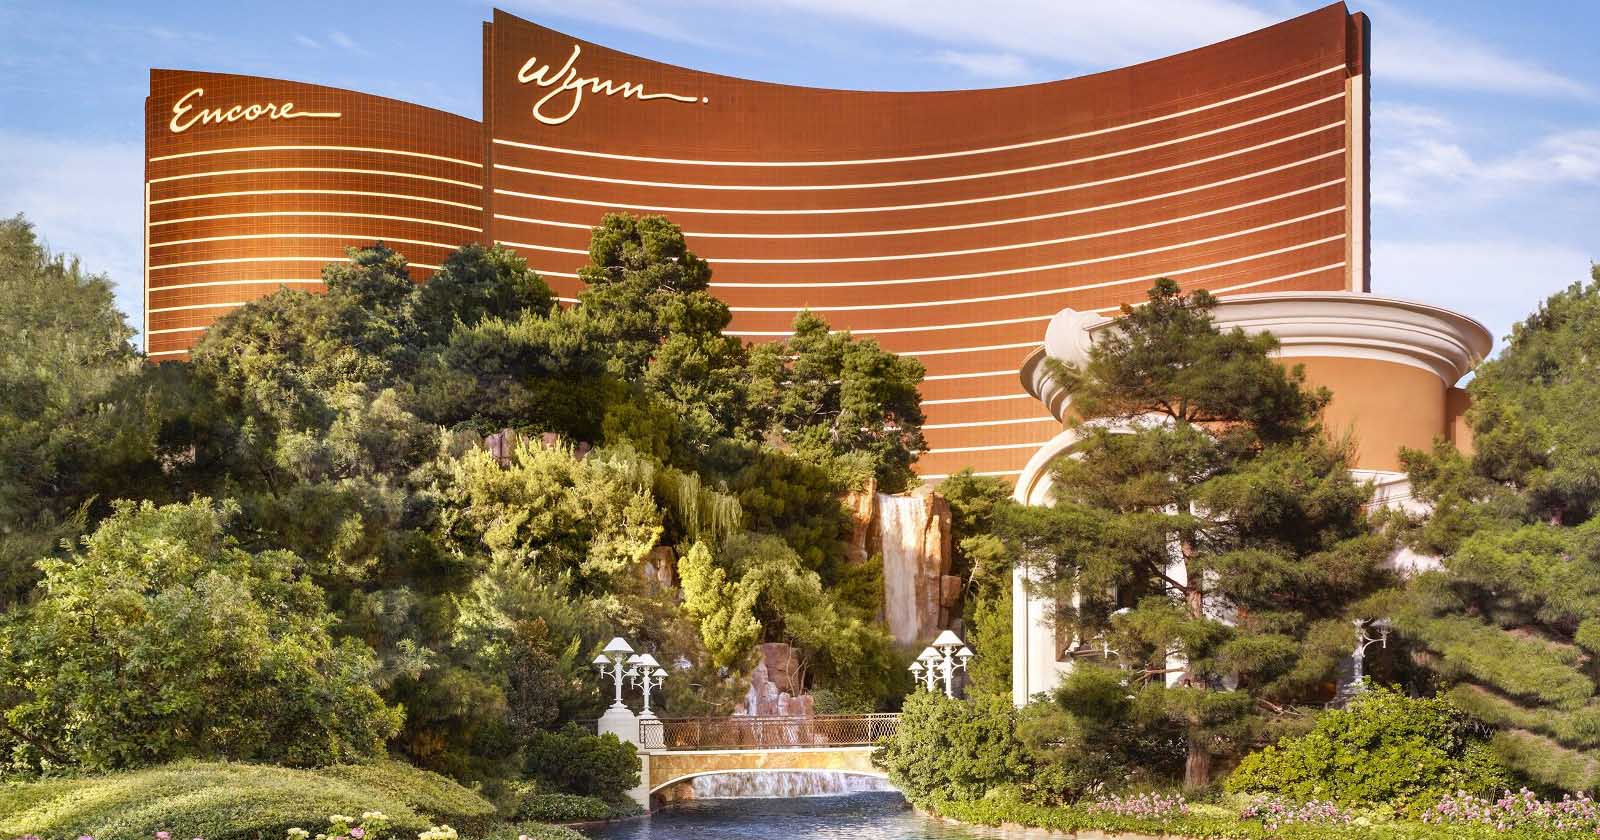 Wynn Encore Las Vegas hotels - Most opulent and luxury casino on the Strip